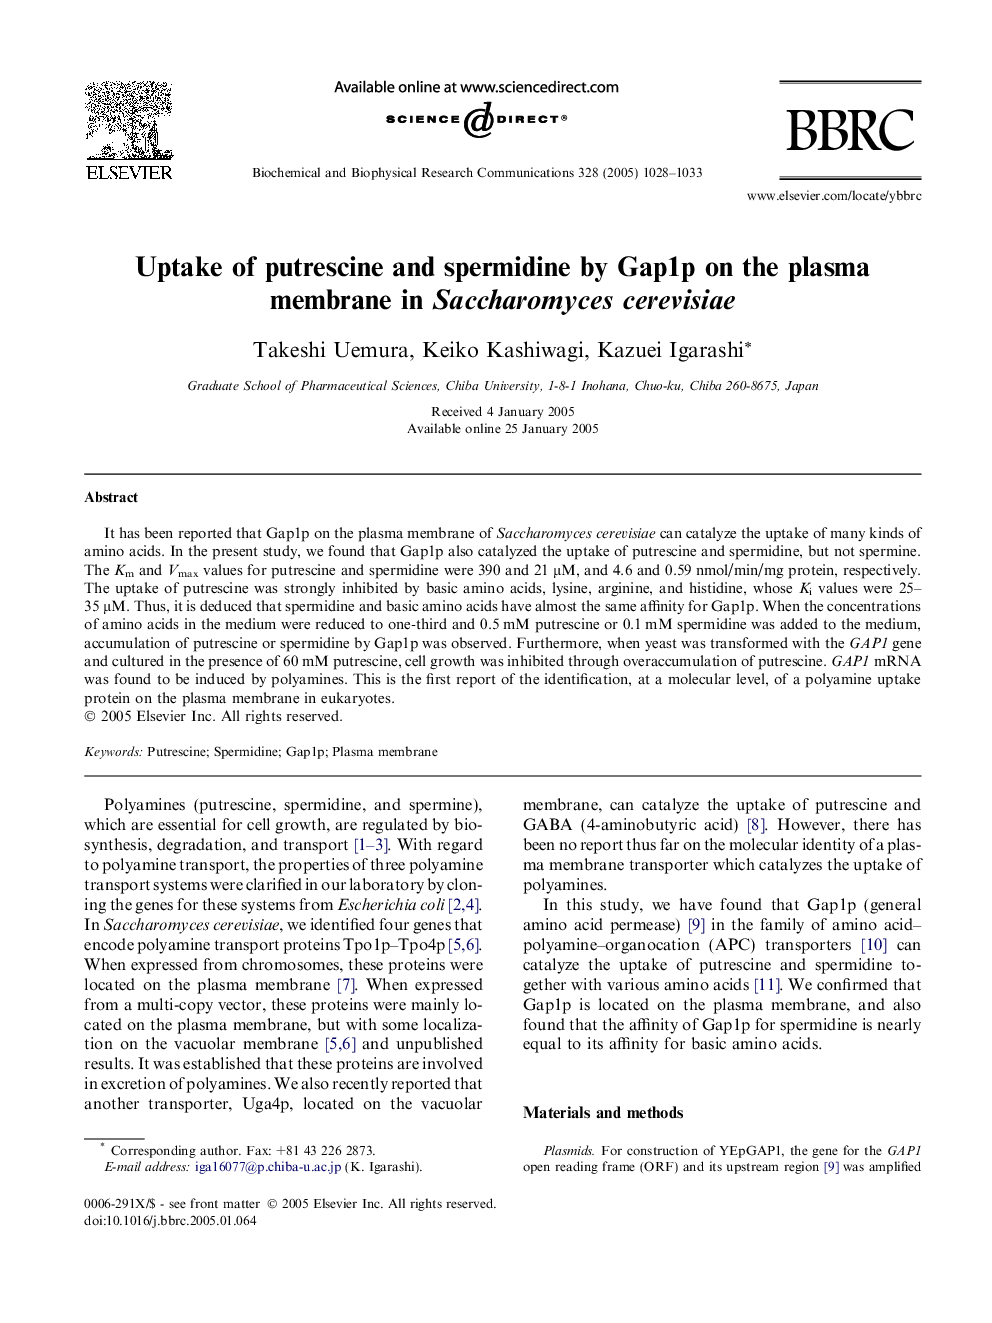 Uptake of putrescine and spermidine by Gap1p on the plasma membrane in Saccharomyces cerevisiae